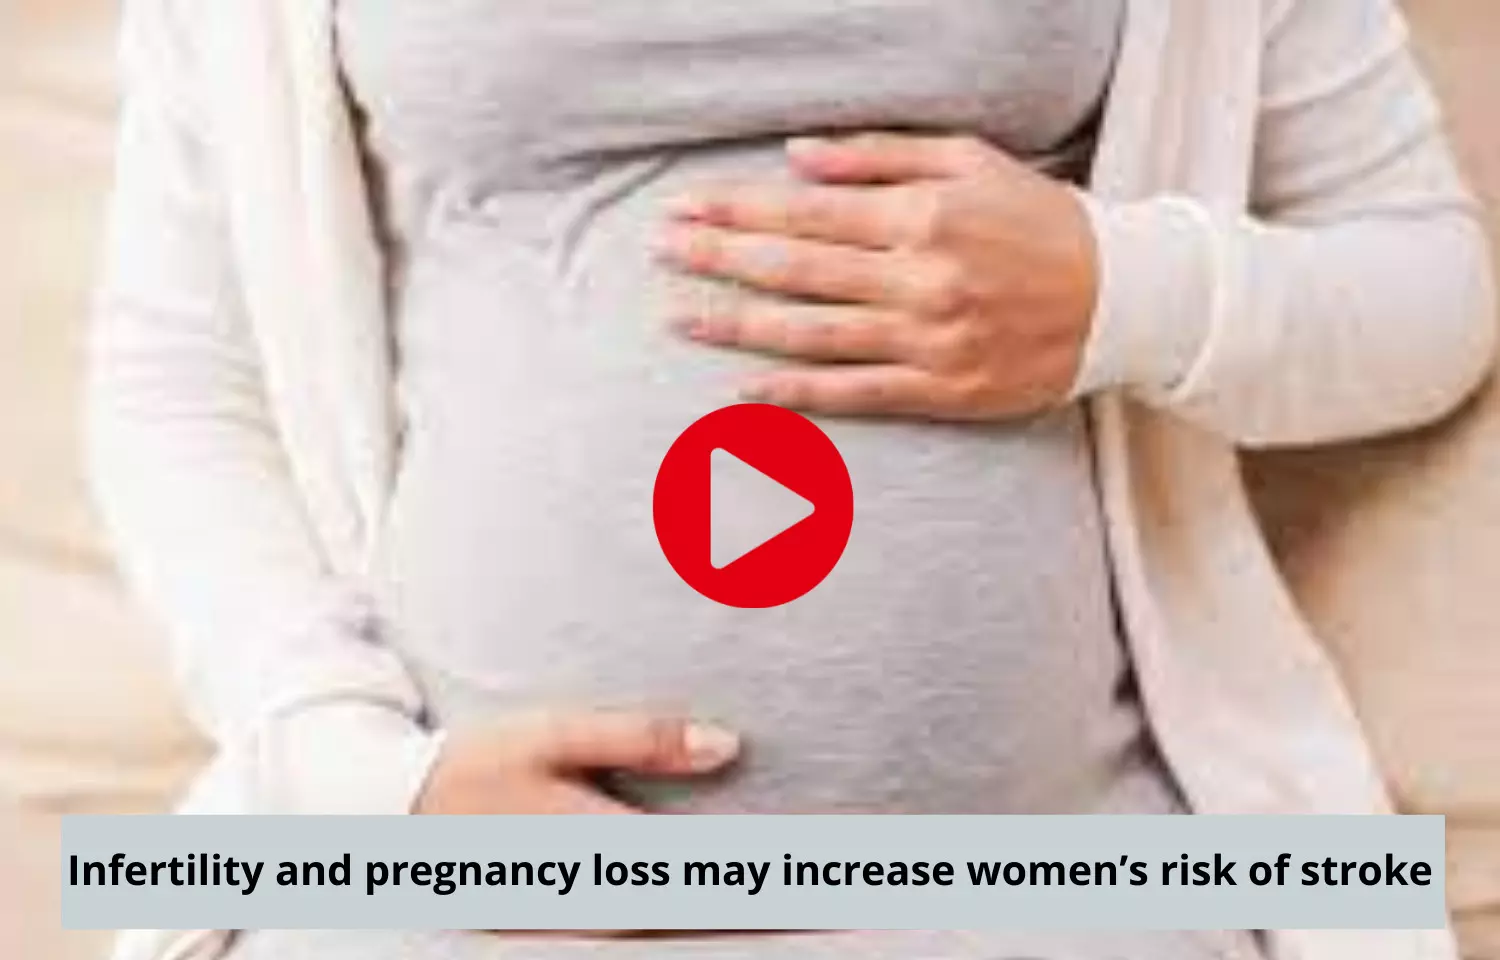 Infertility and pregnancy loss risk factors for stroke in women